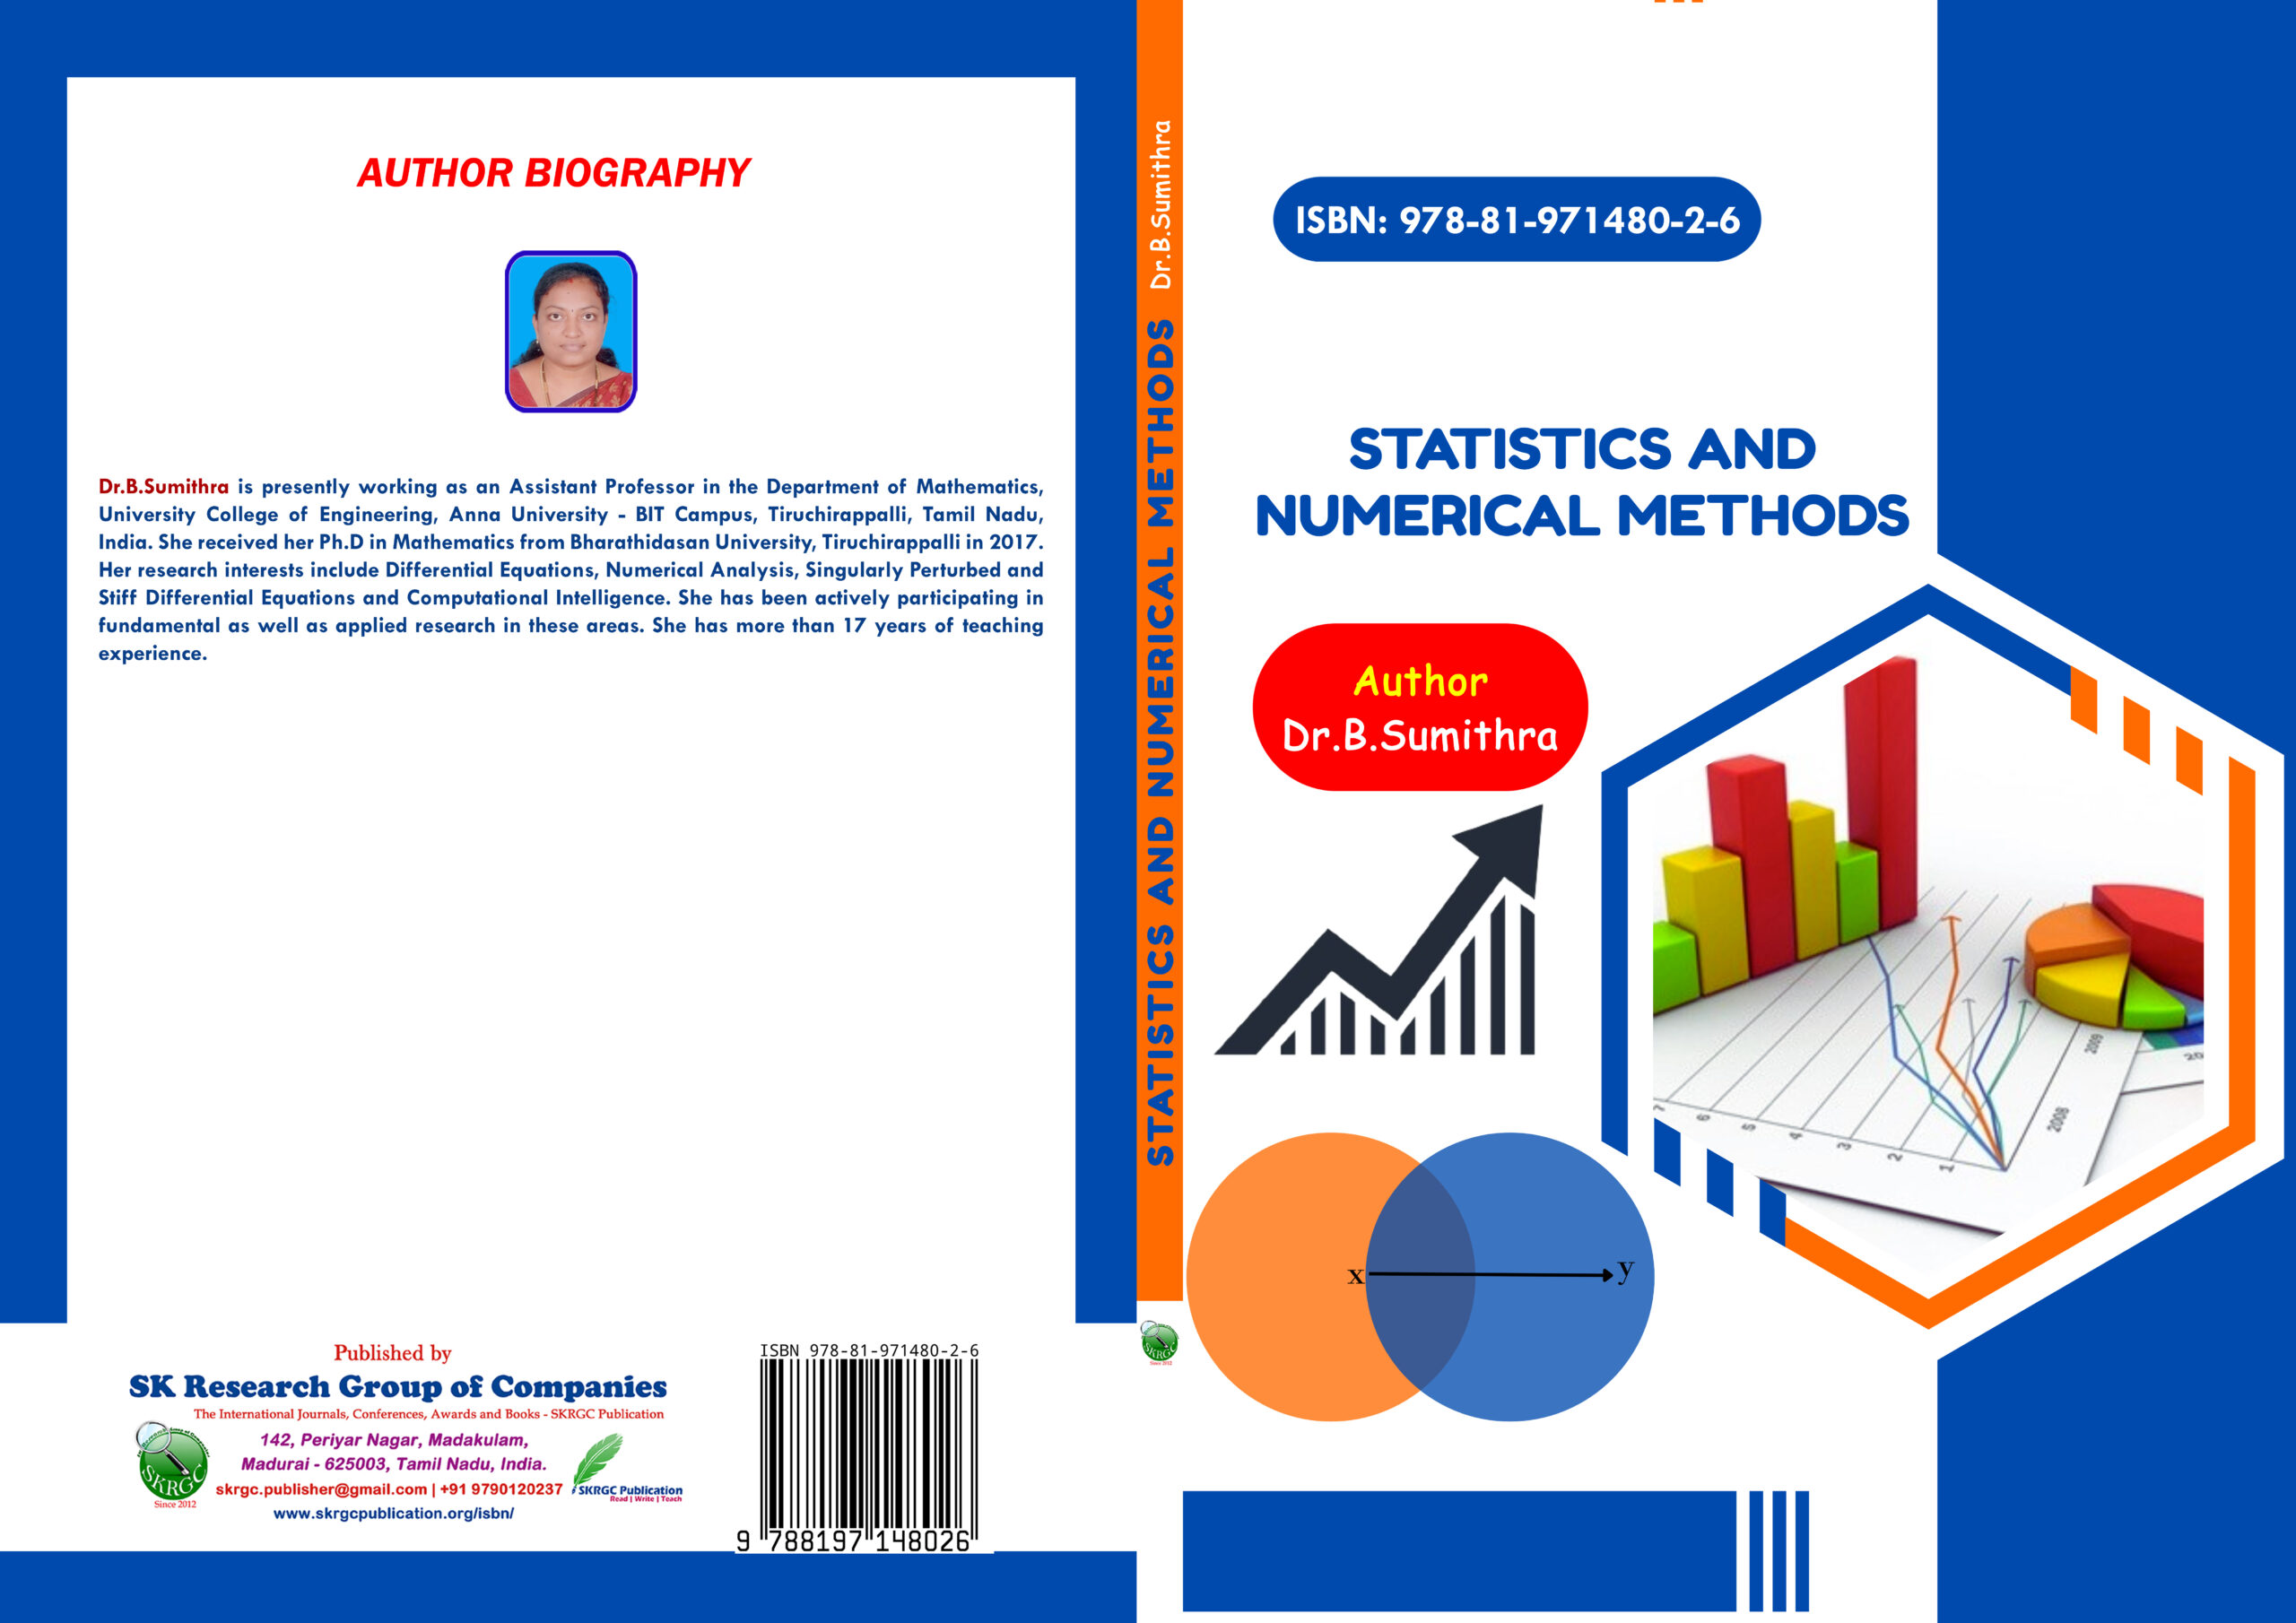 STATISTICS AND NUMERICAL METHODS